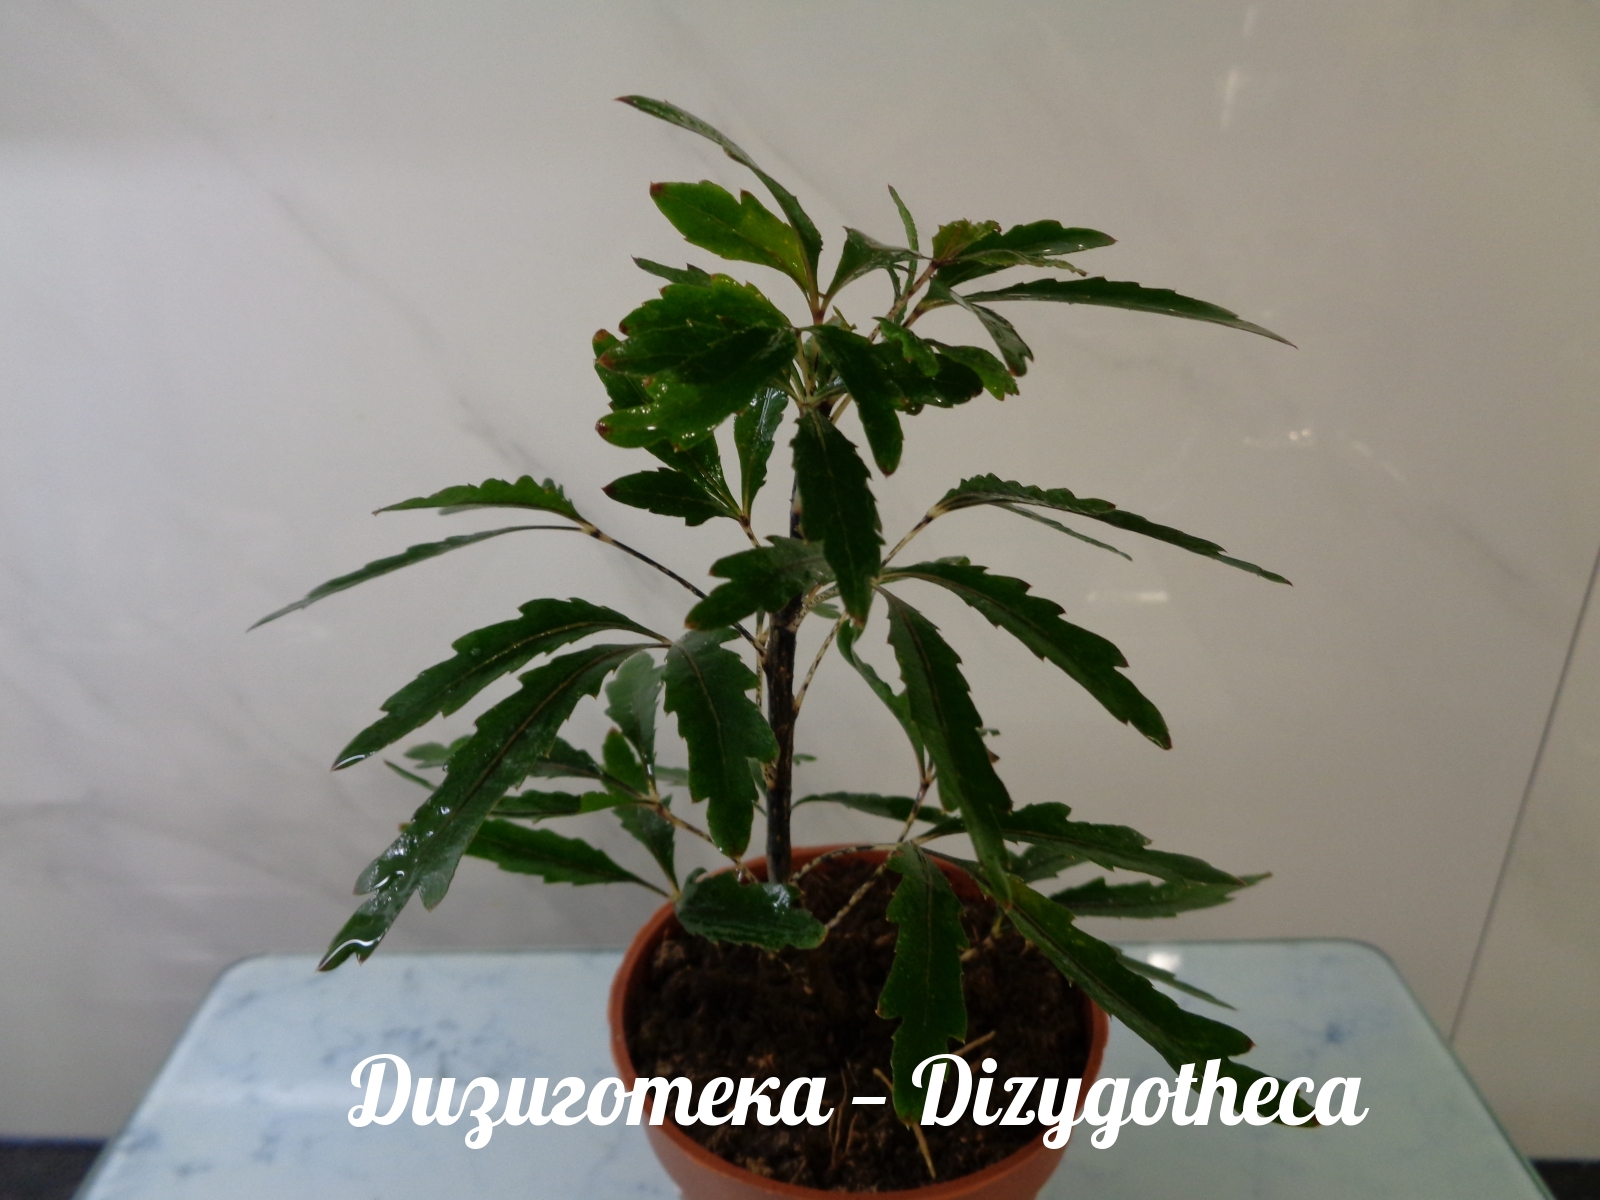   Dizygotheca